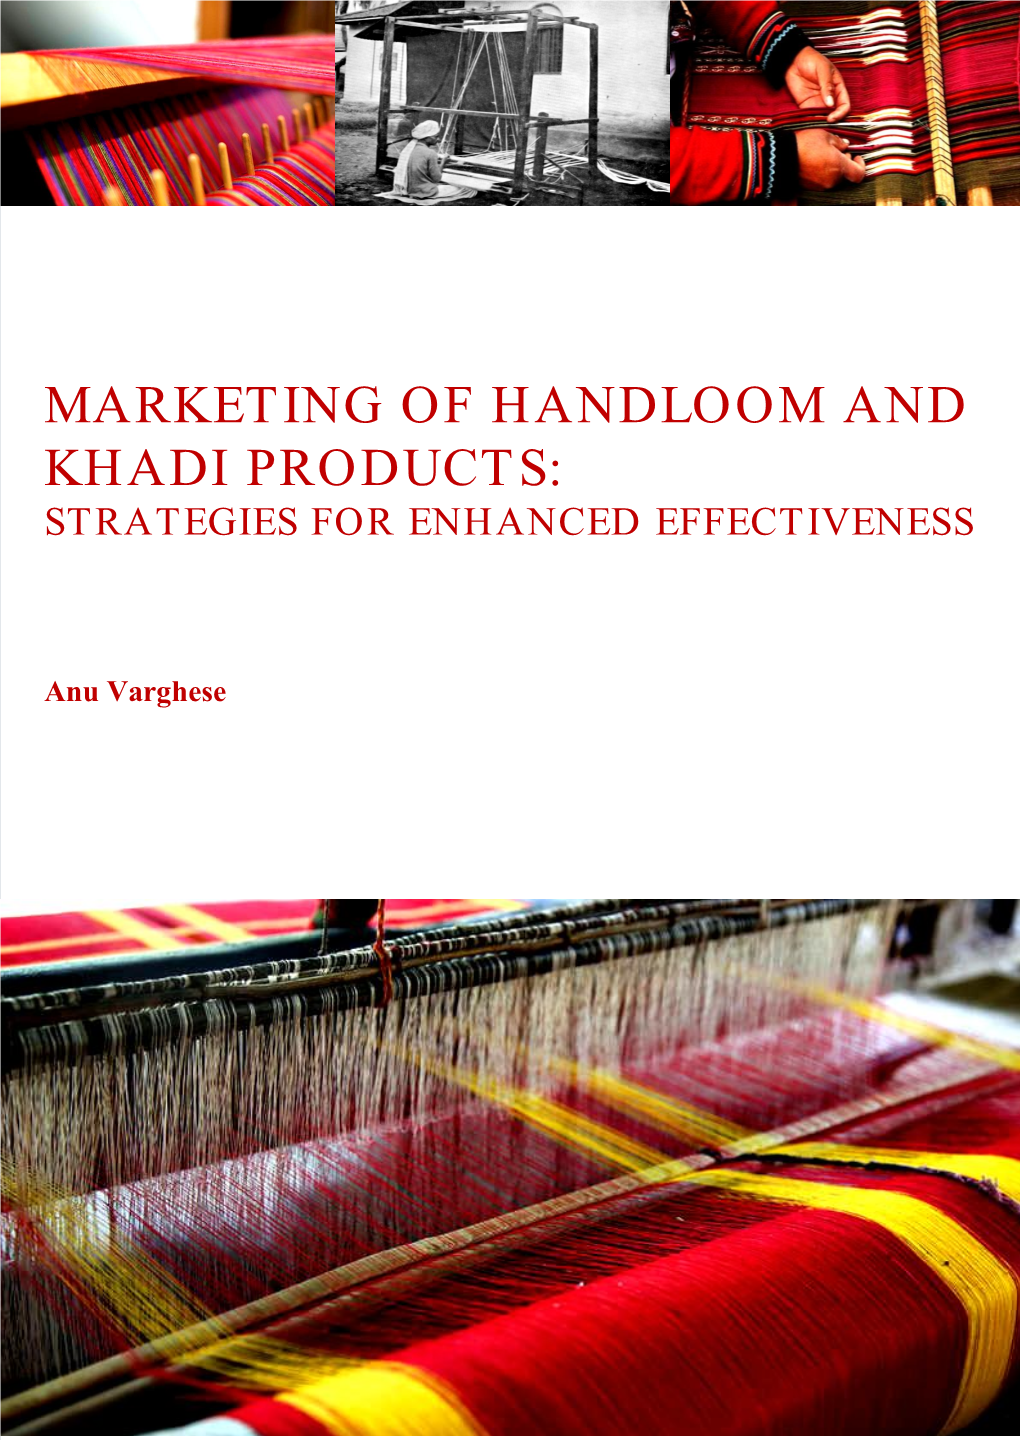 Marketing of Handloom and Khadi Products: Strategies for Enhanced Effectiveness